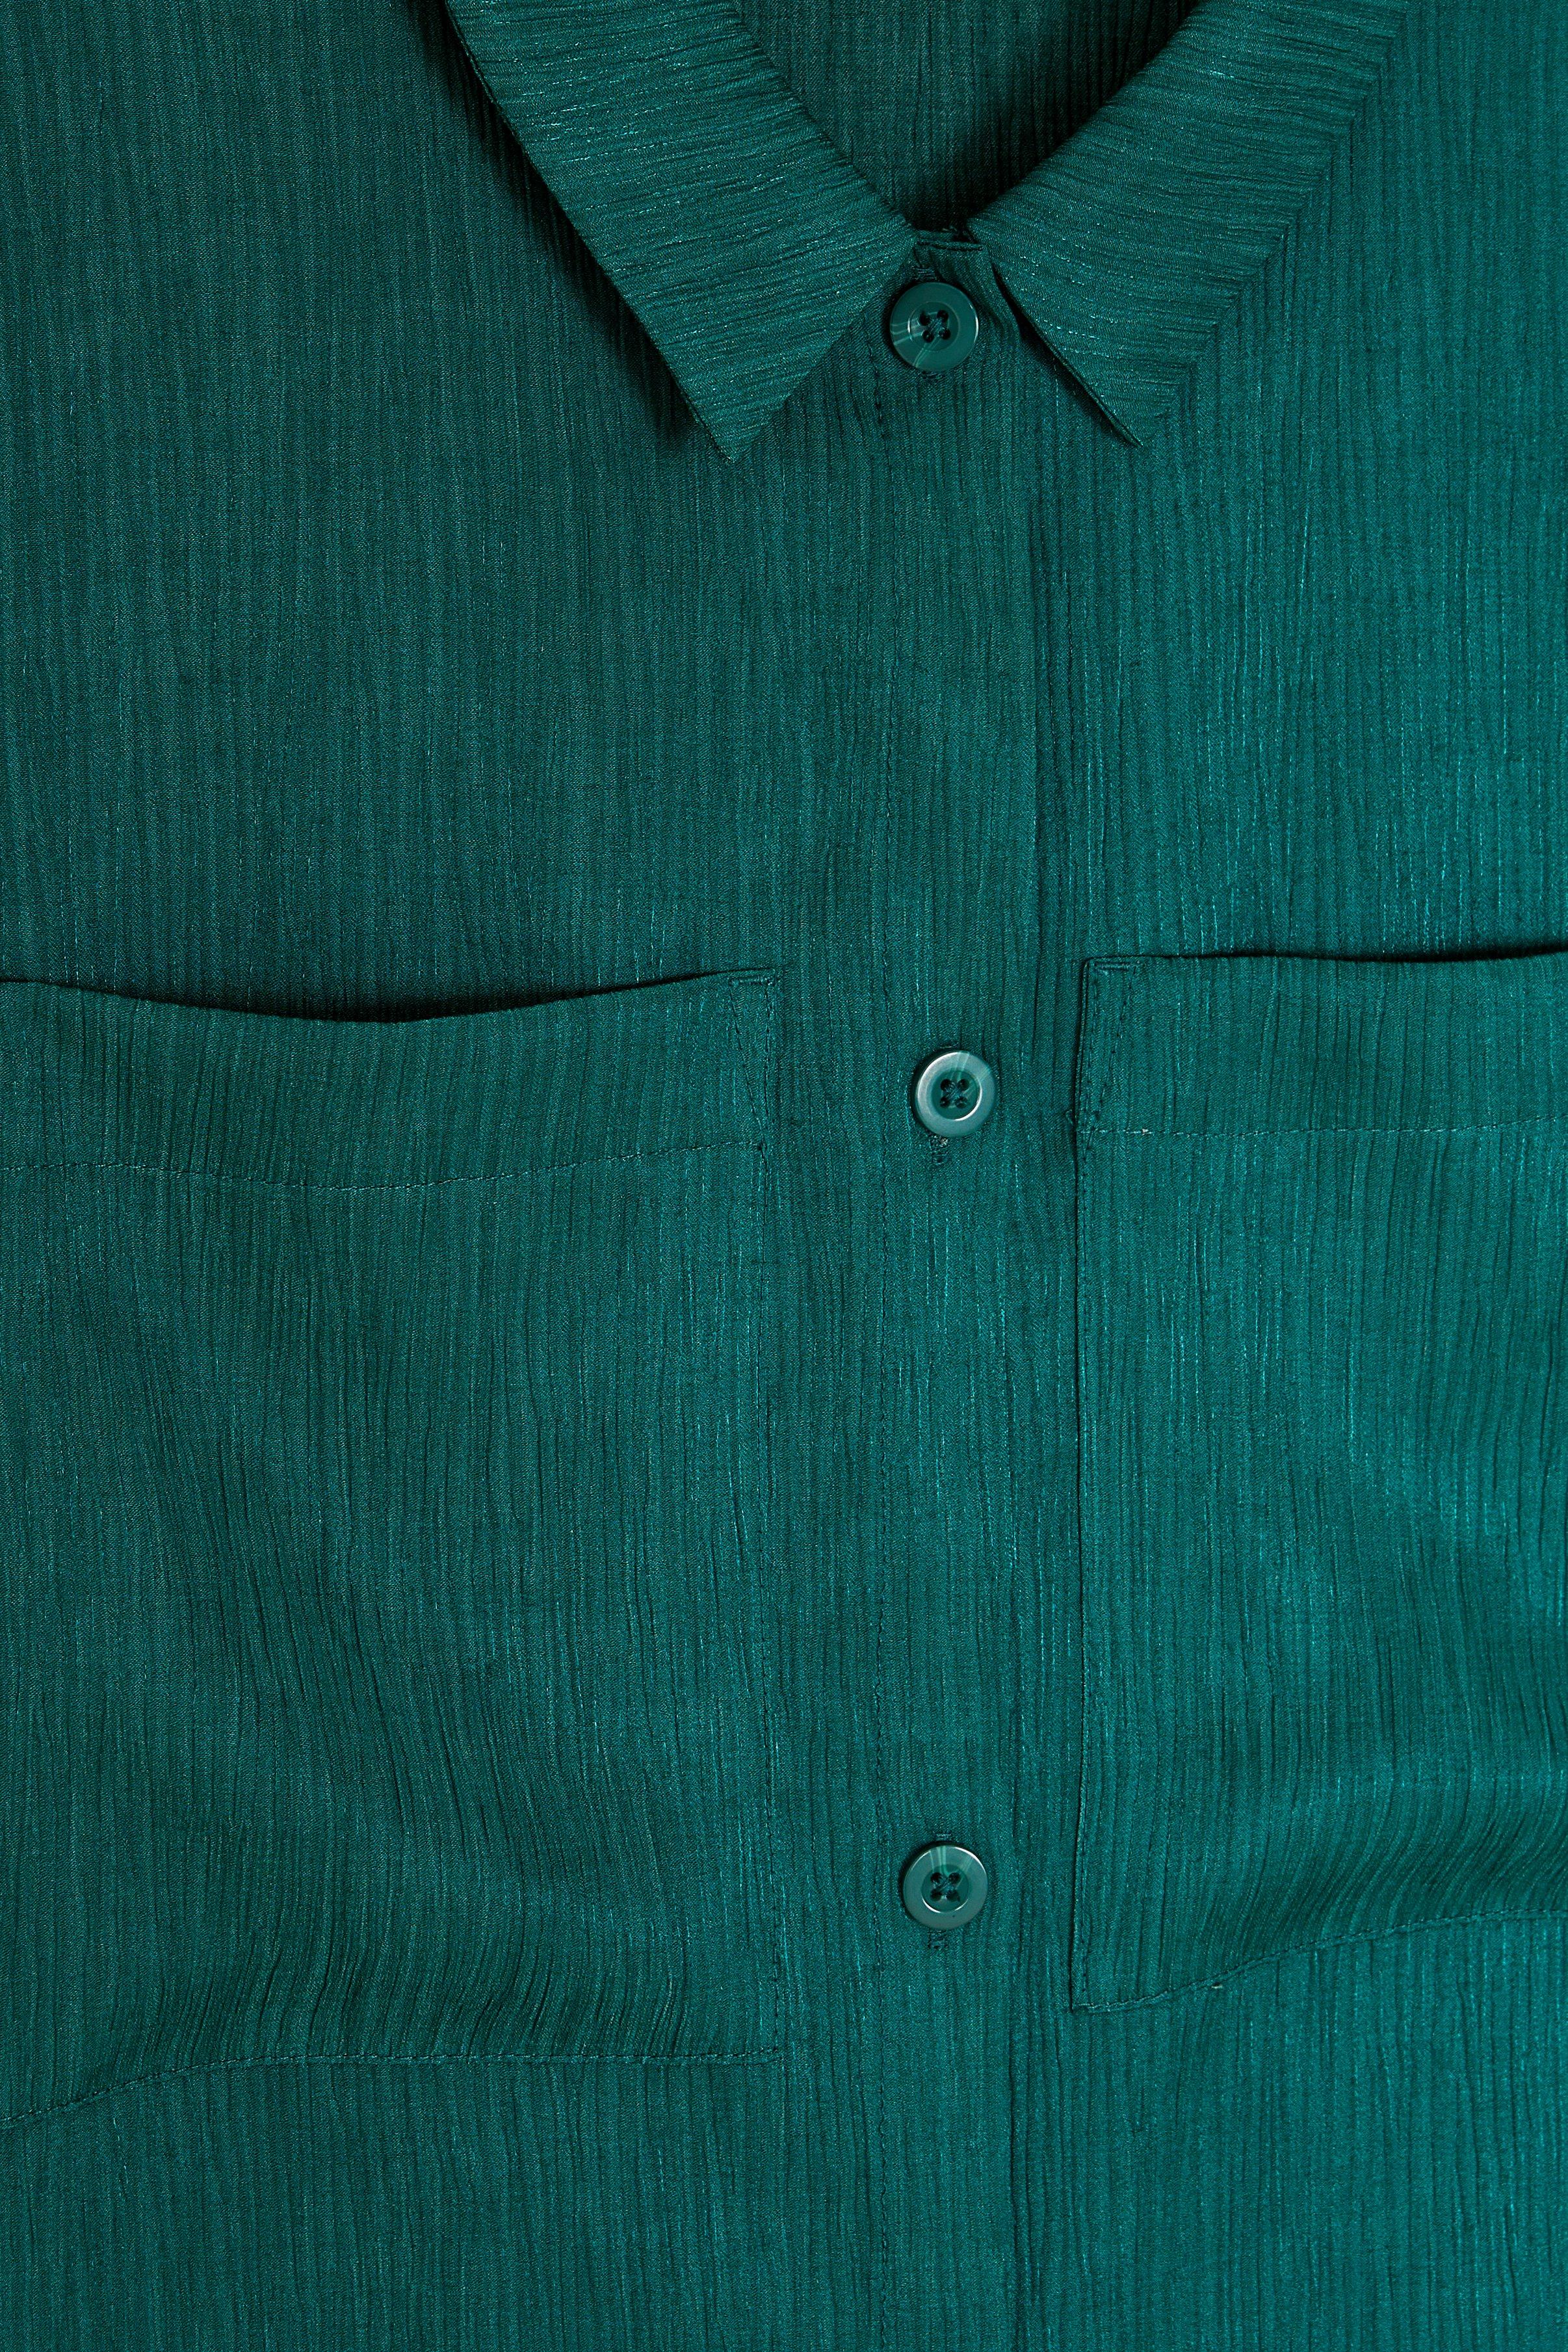 CKS Dames - SELINALONG - blouse long sleeves - dark green